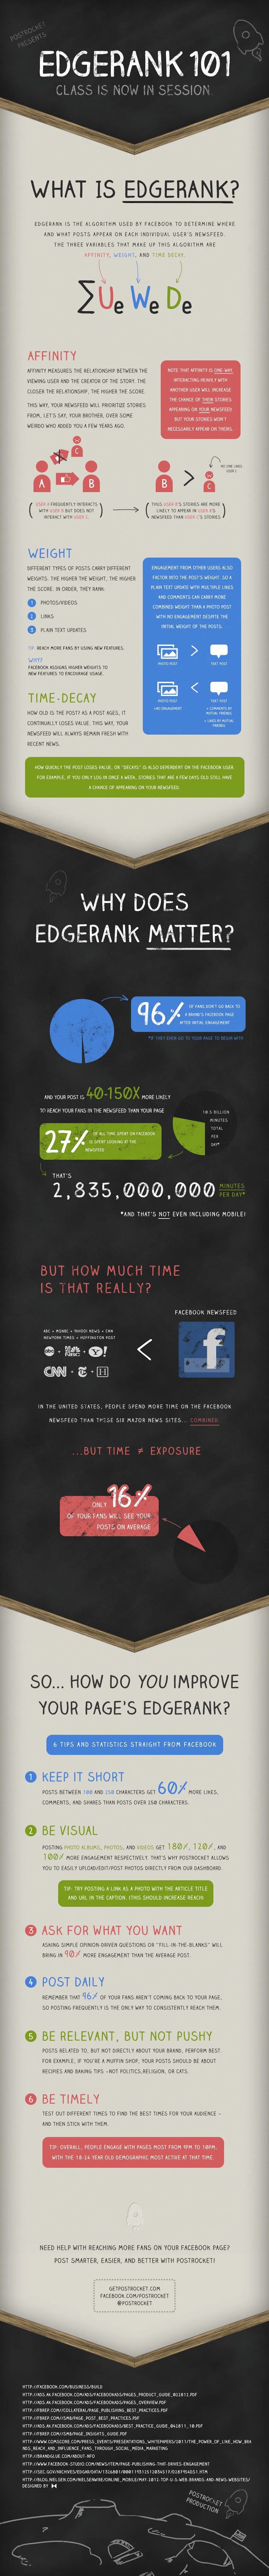 facebook edgerank infographic